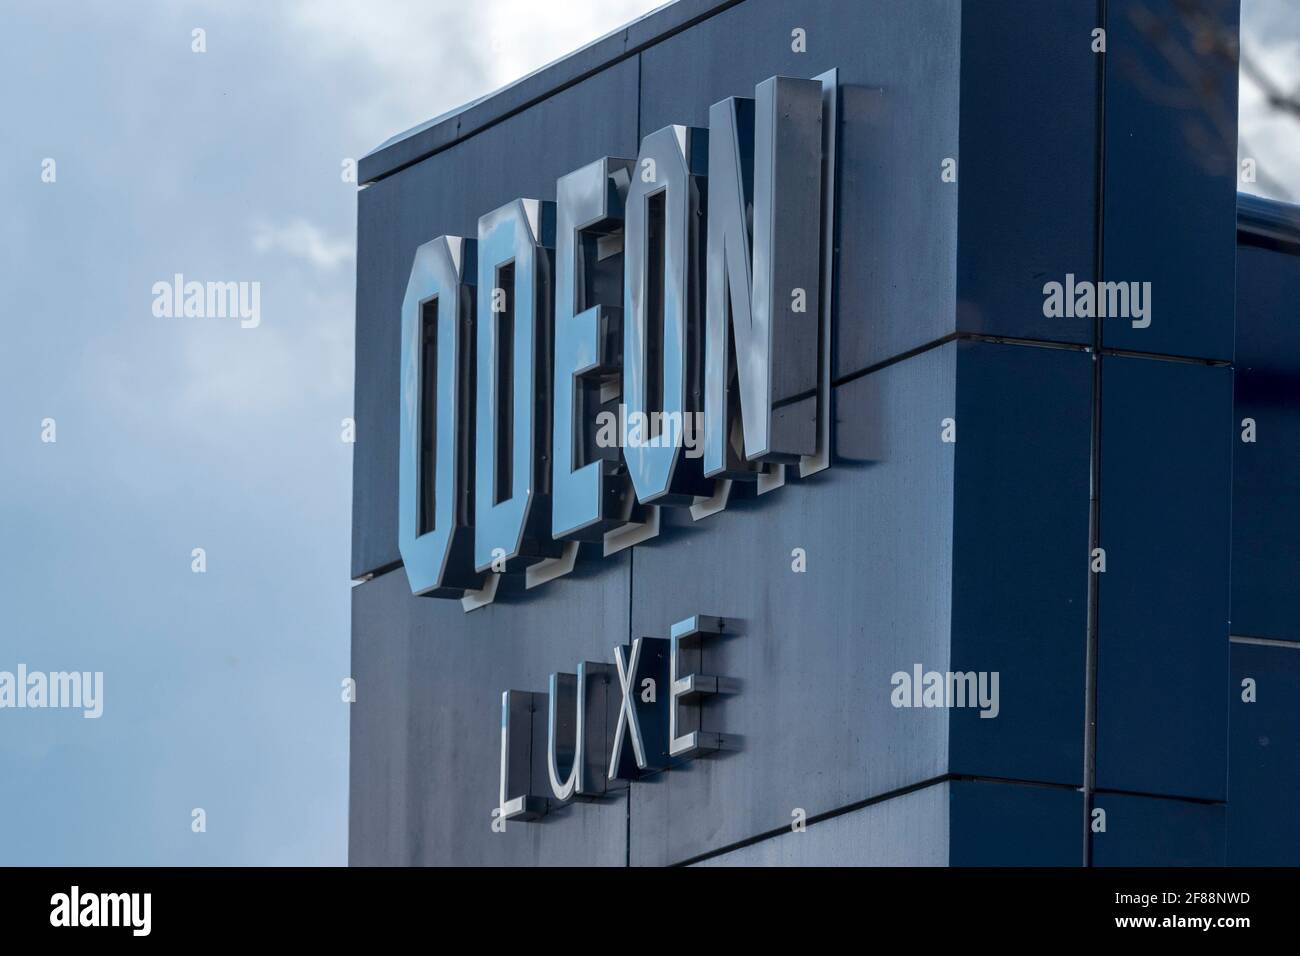 Odeon Luxe cinema sign. Stock Photo